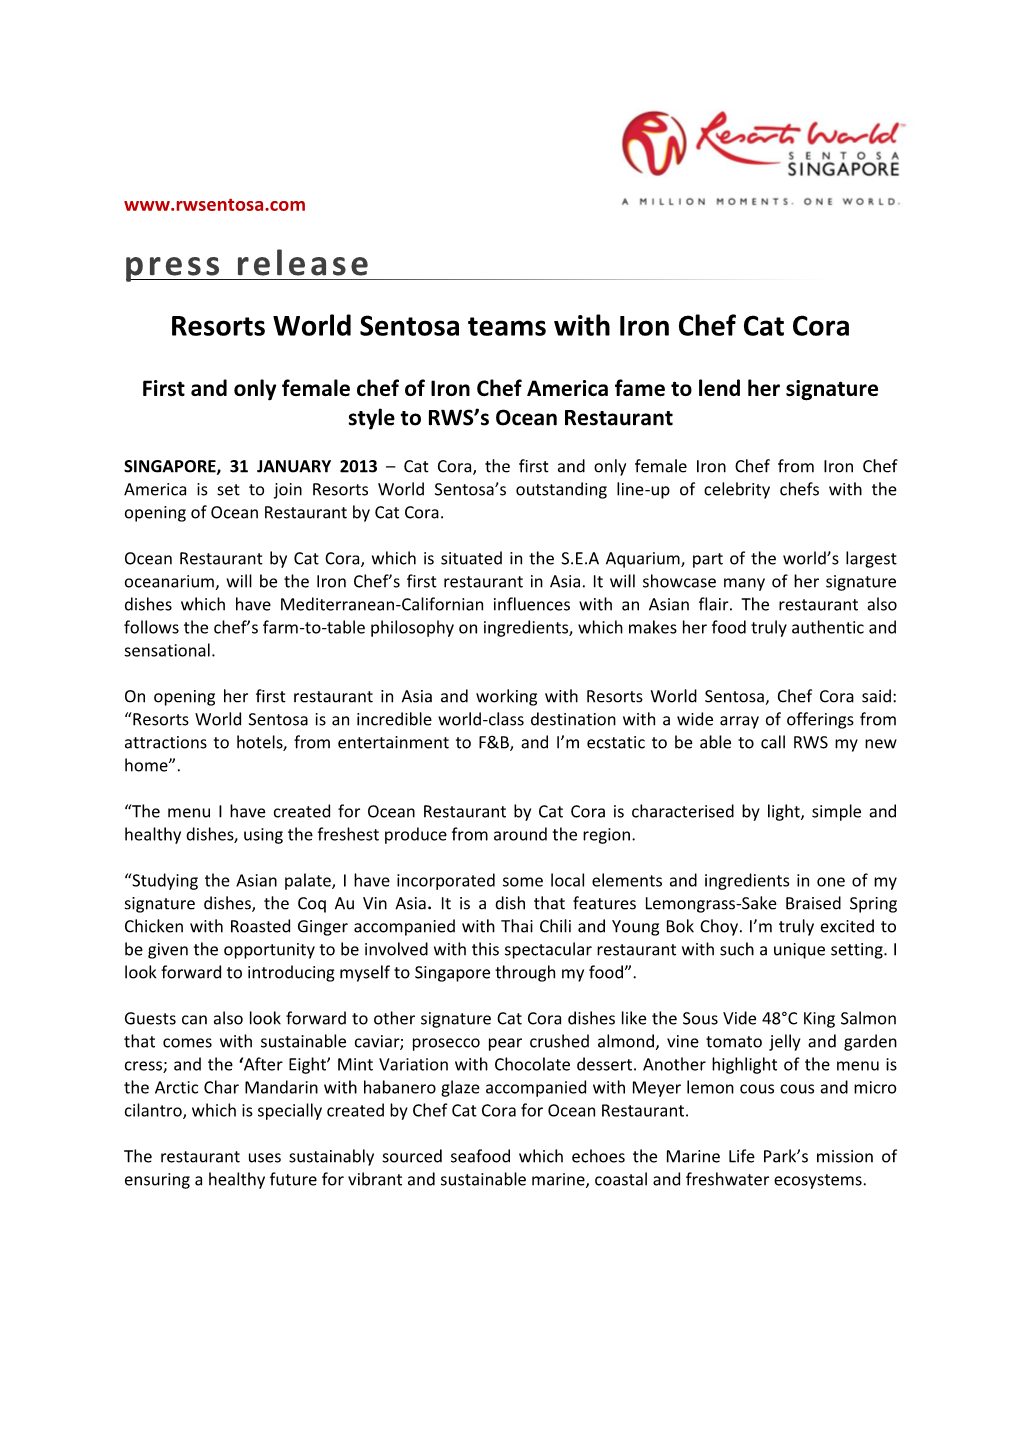 Resorts World Sentosa Teams up with Iron Chef Cat Cora